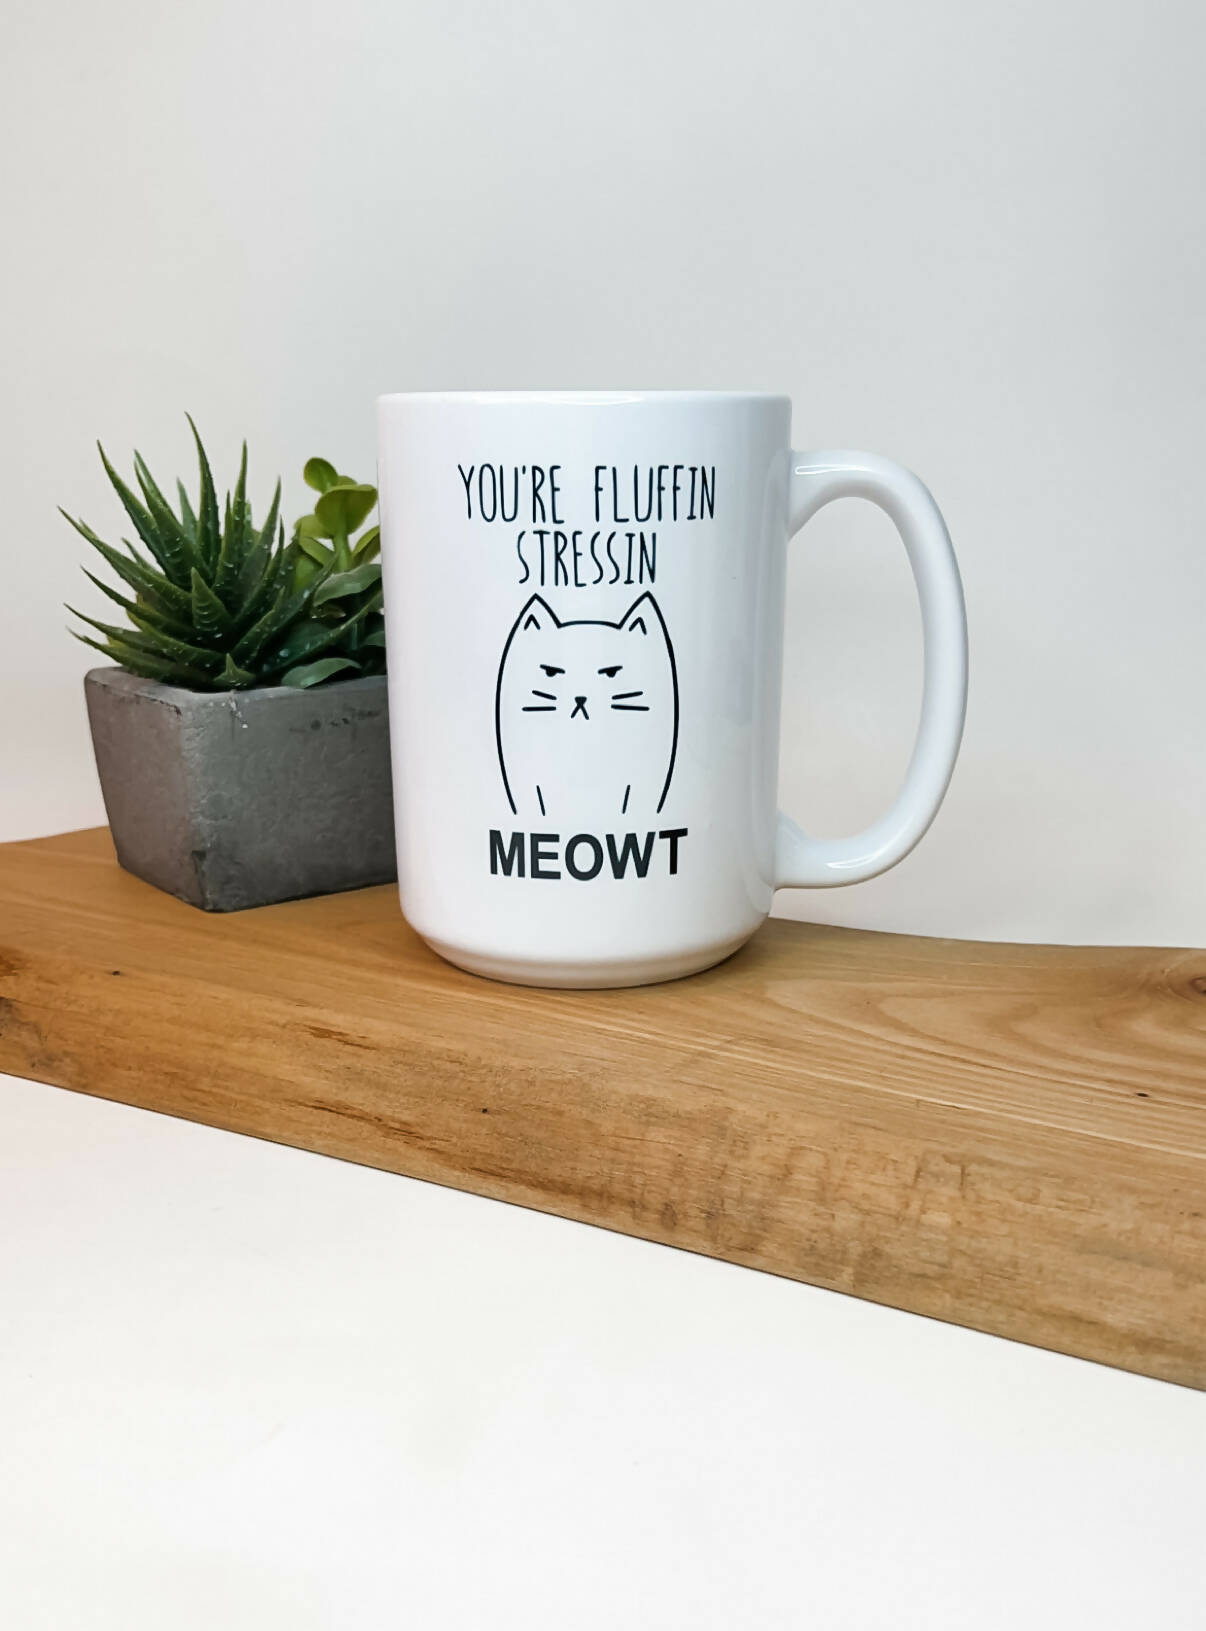 You're Fluffin Stressin Meowt Mug